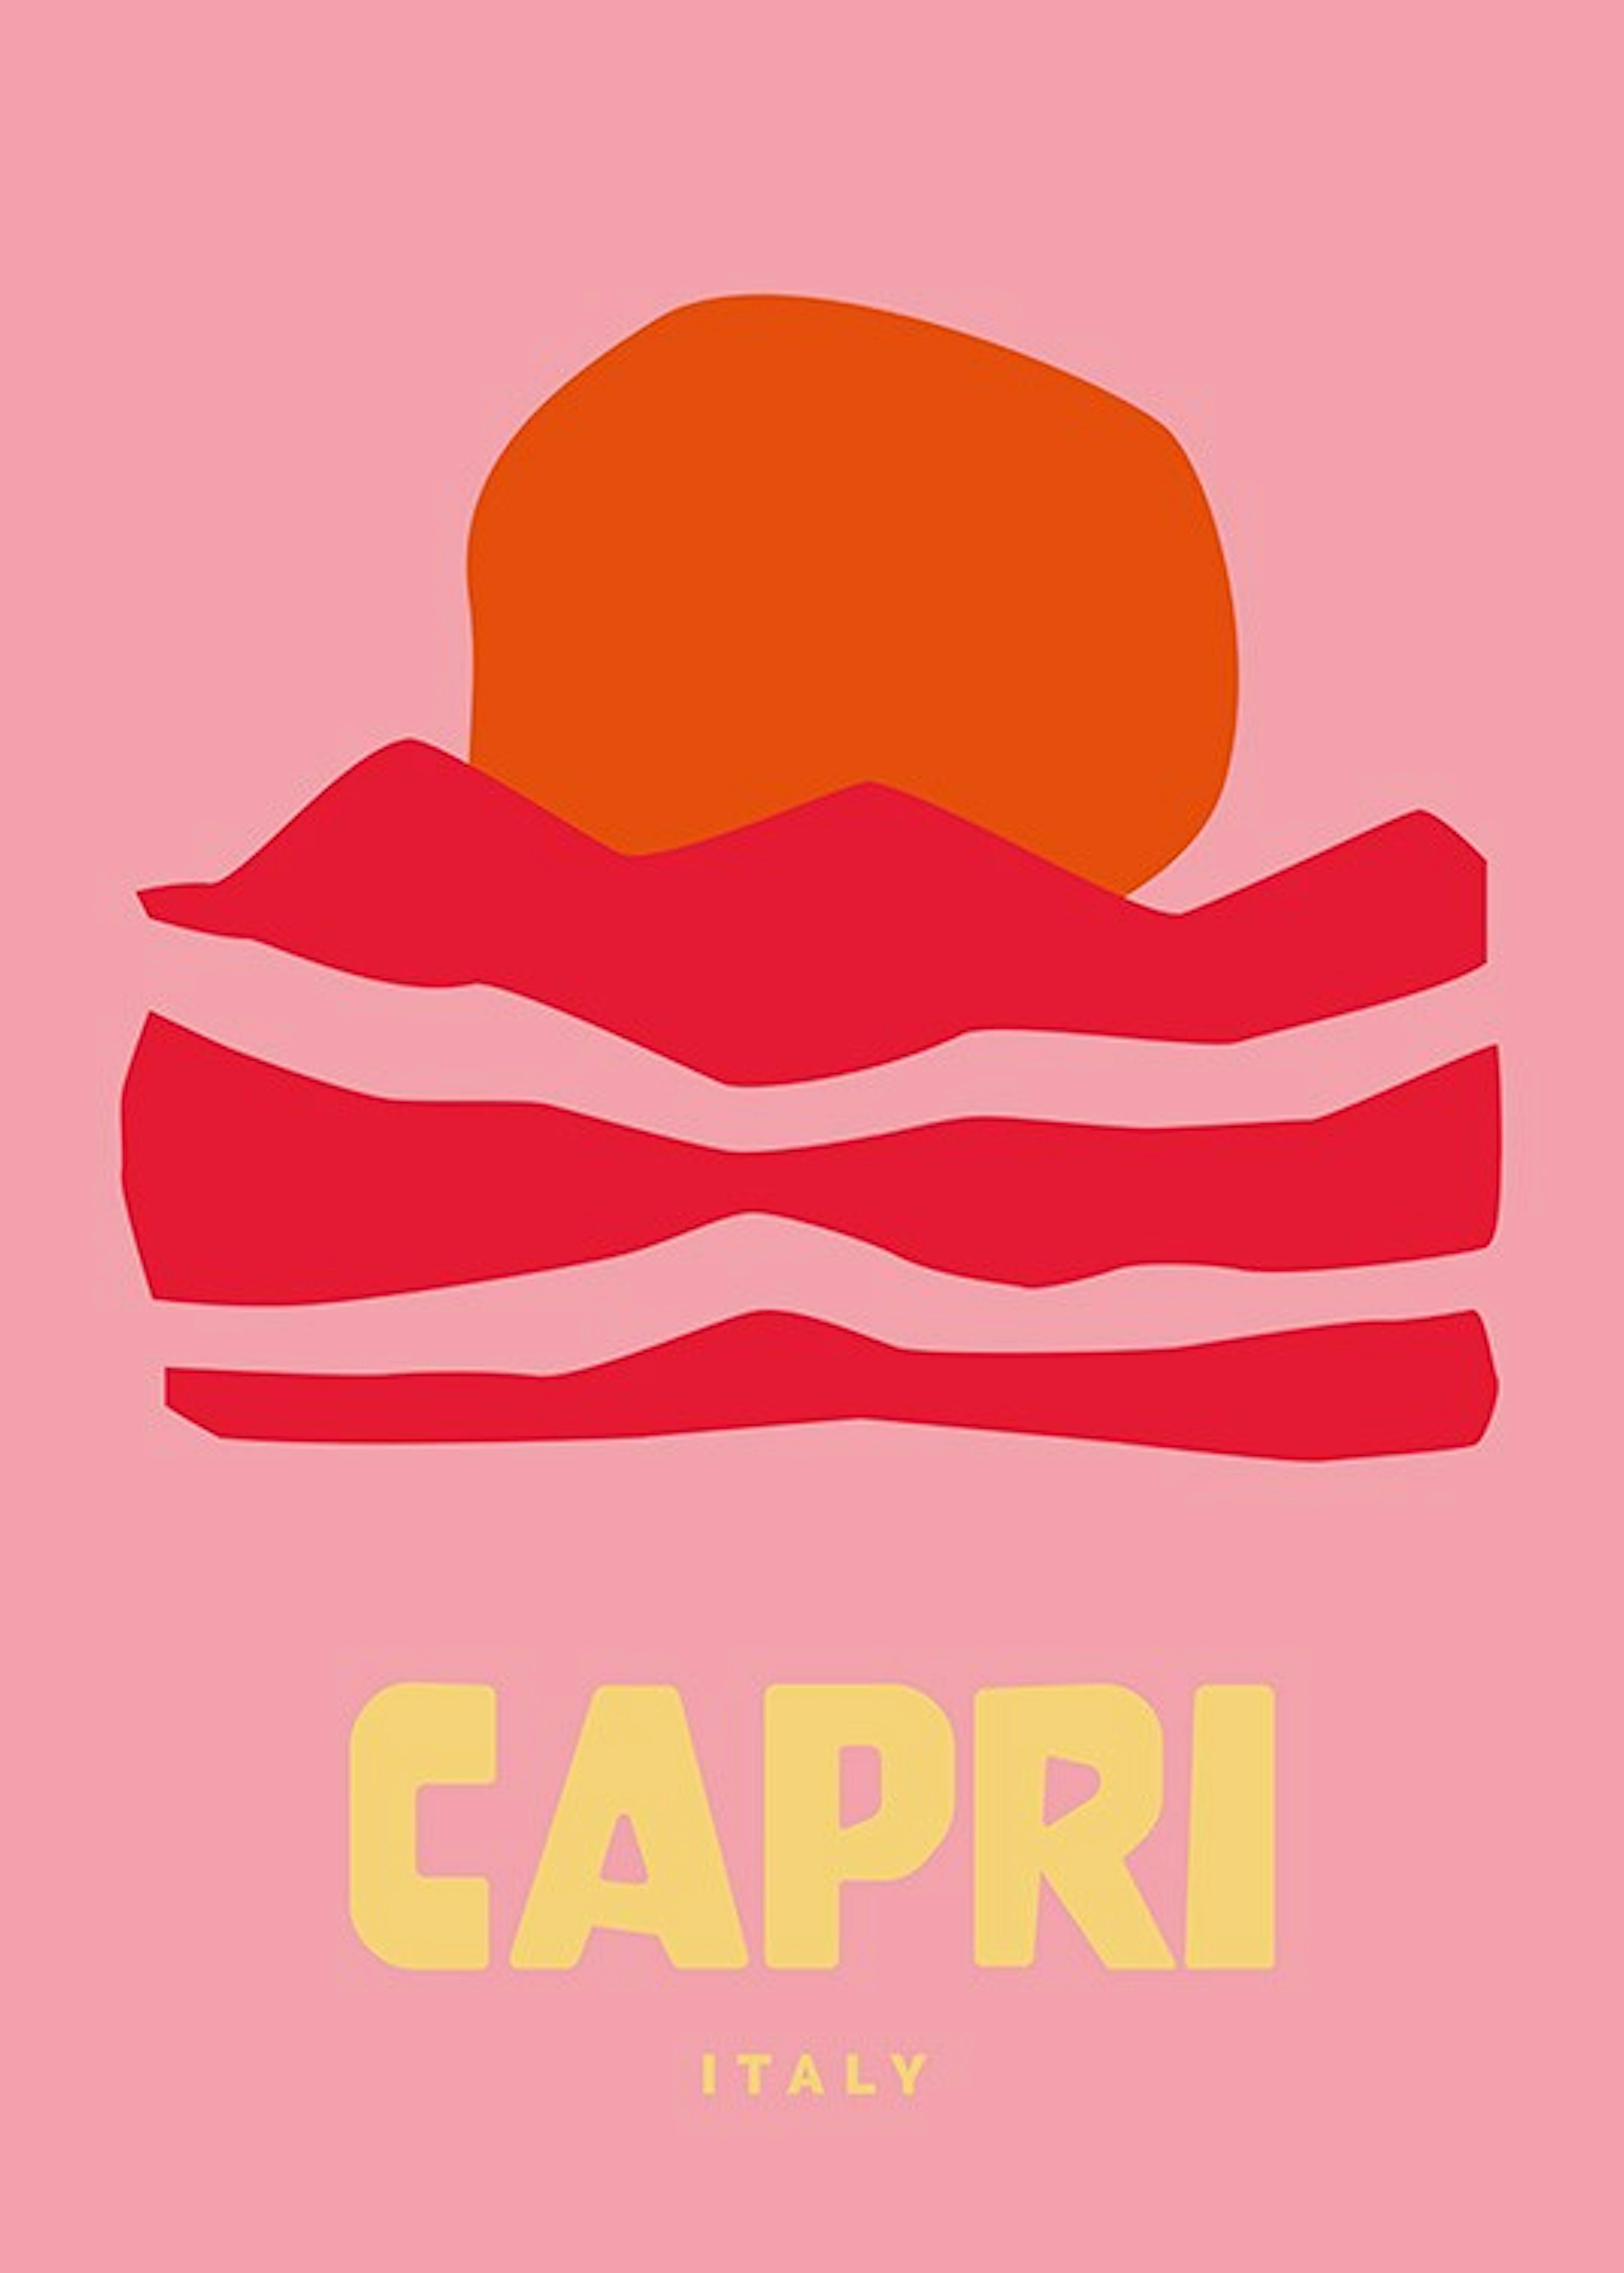 Graphic Capri Poster 0